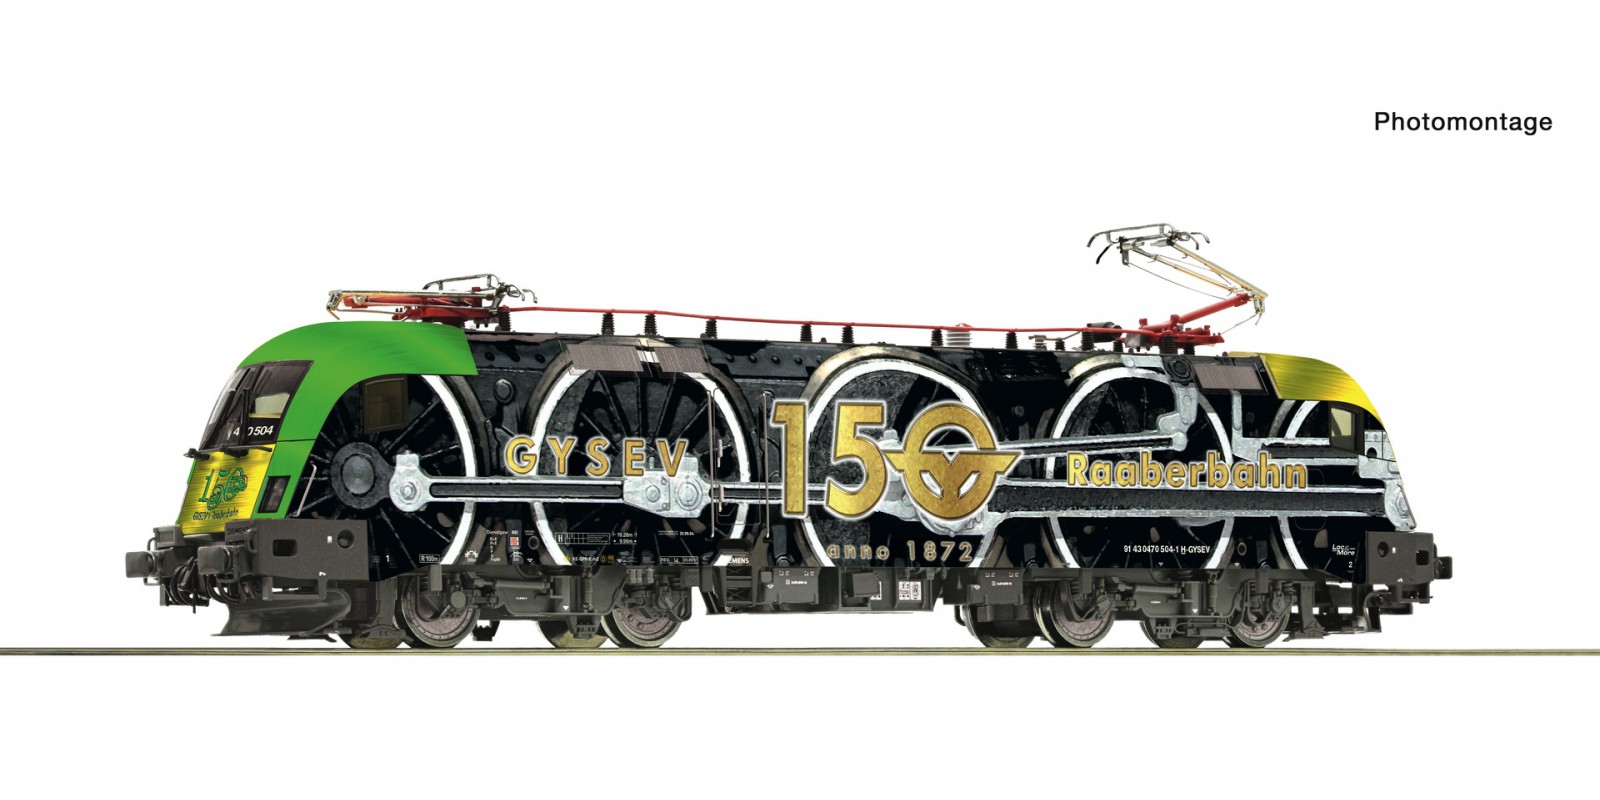 RO78686 Electric locomotive 470 504-1, GYSEV